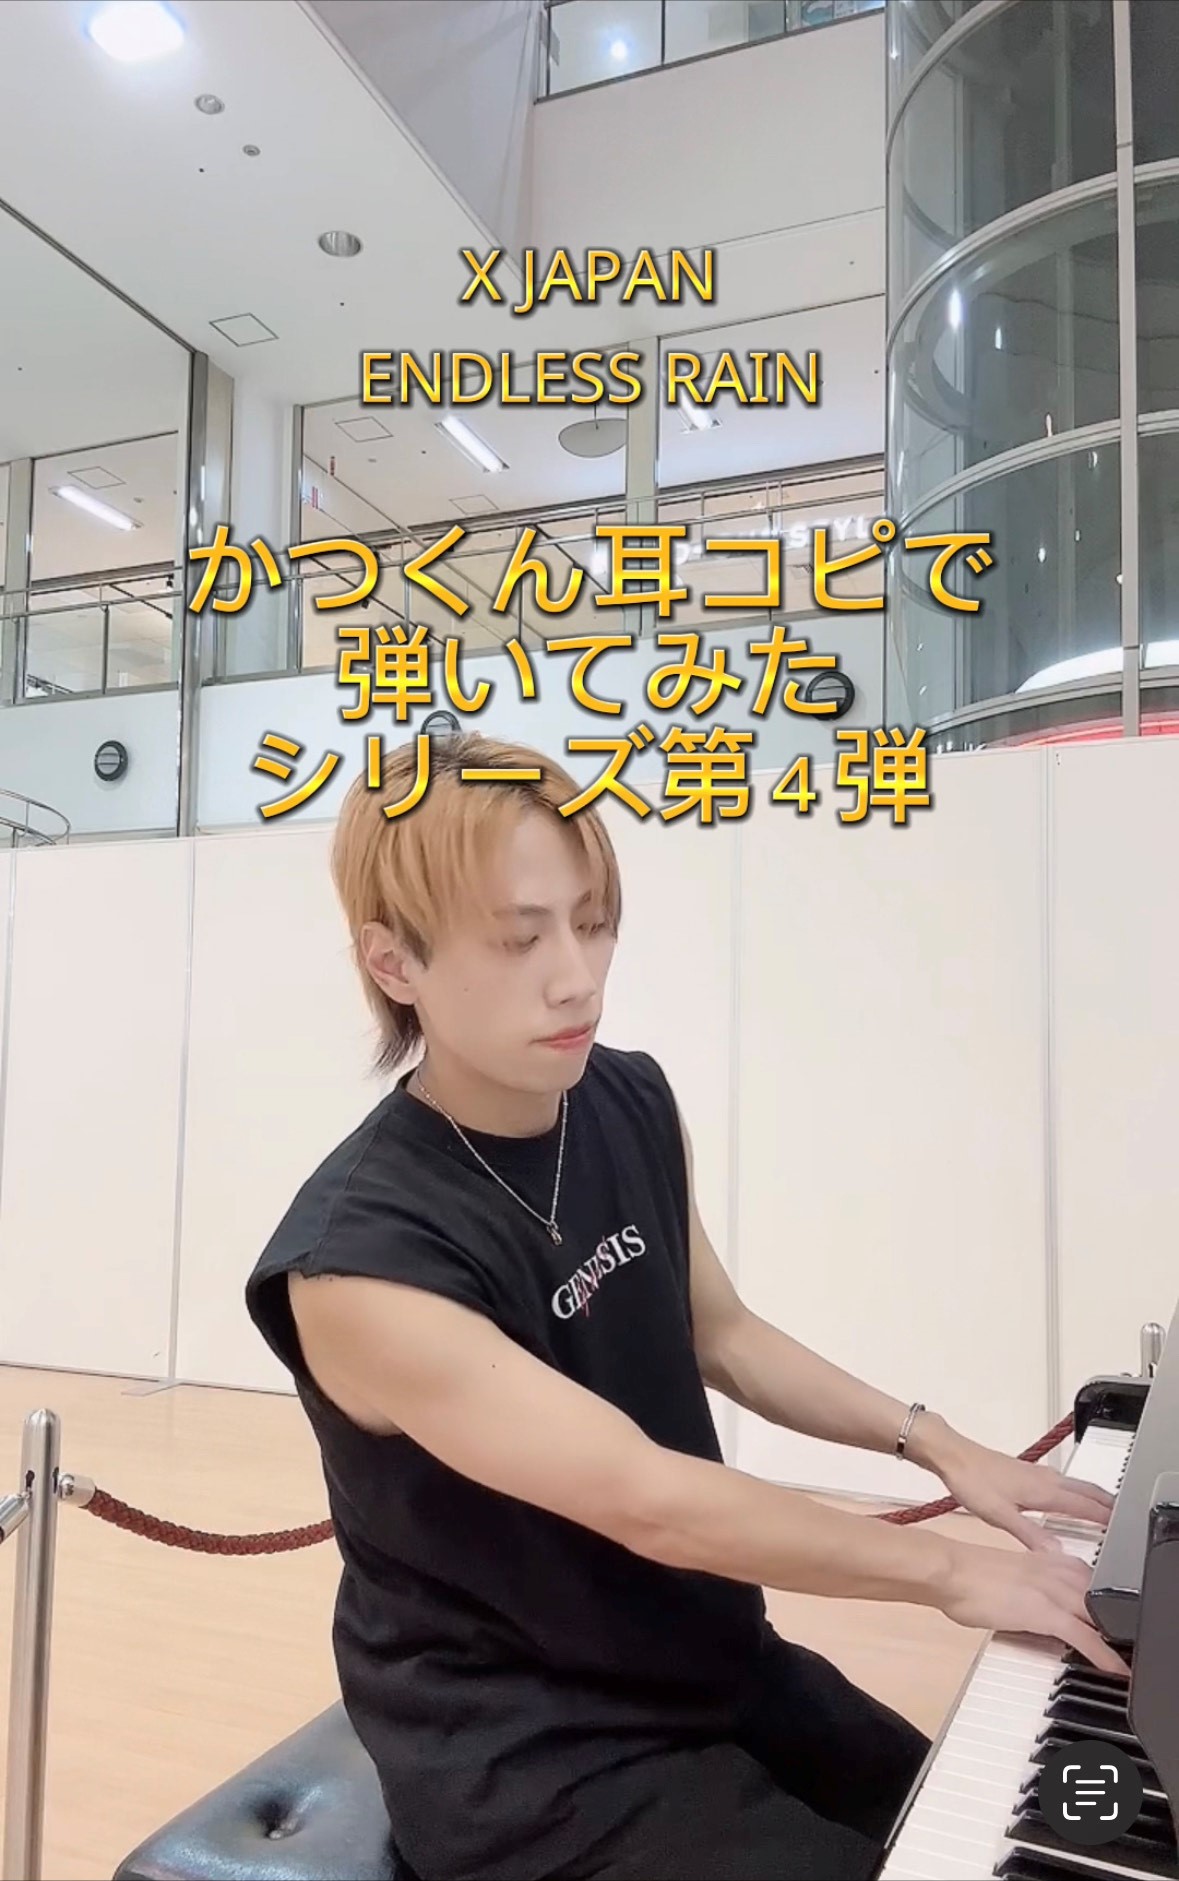 「X JAPAN ENDLESS RAIN」かつくん耳コピで弾いてみたシリーズ第4弾